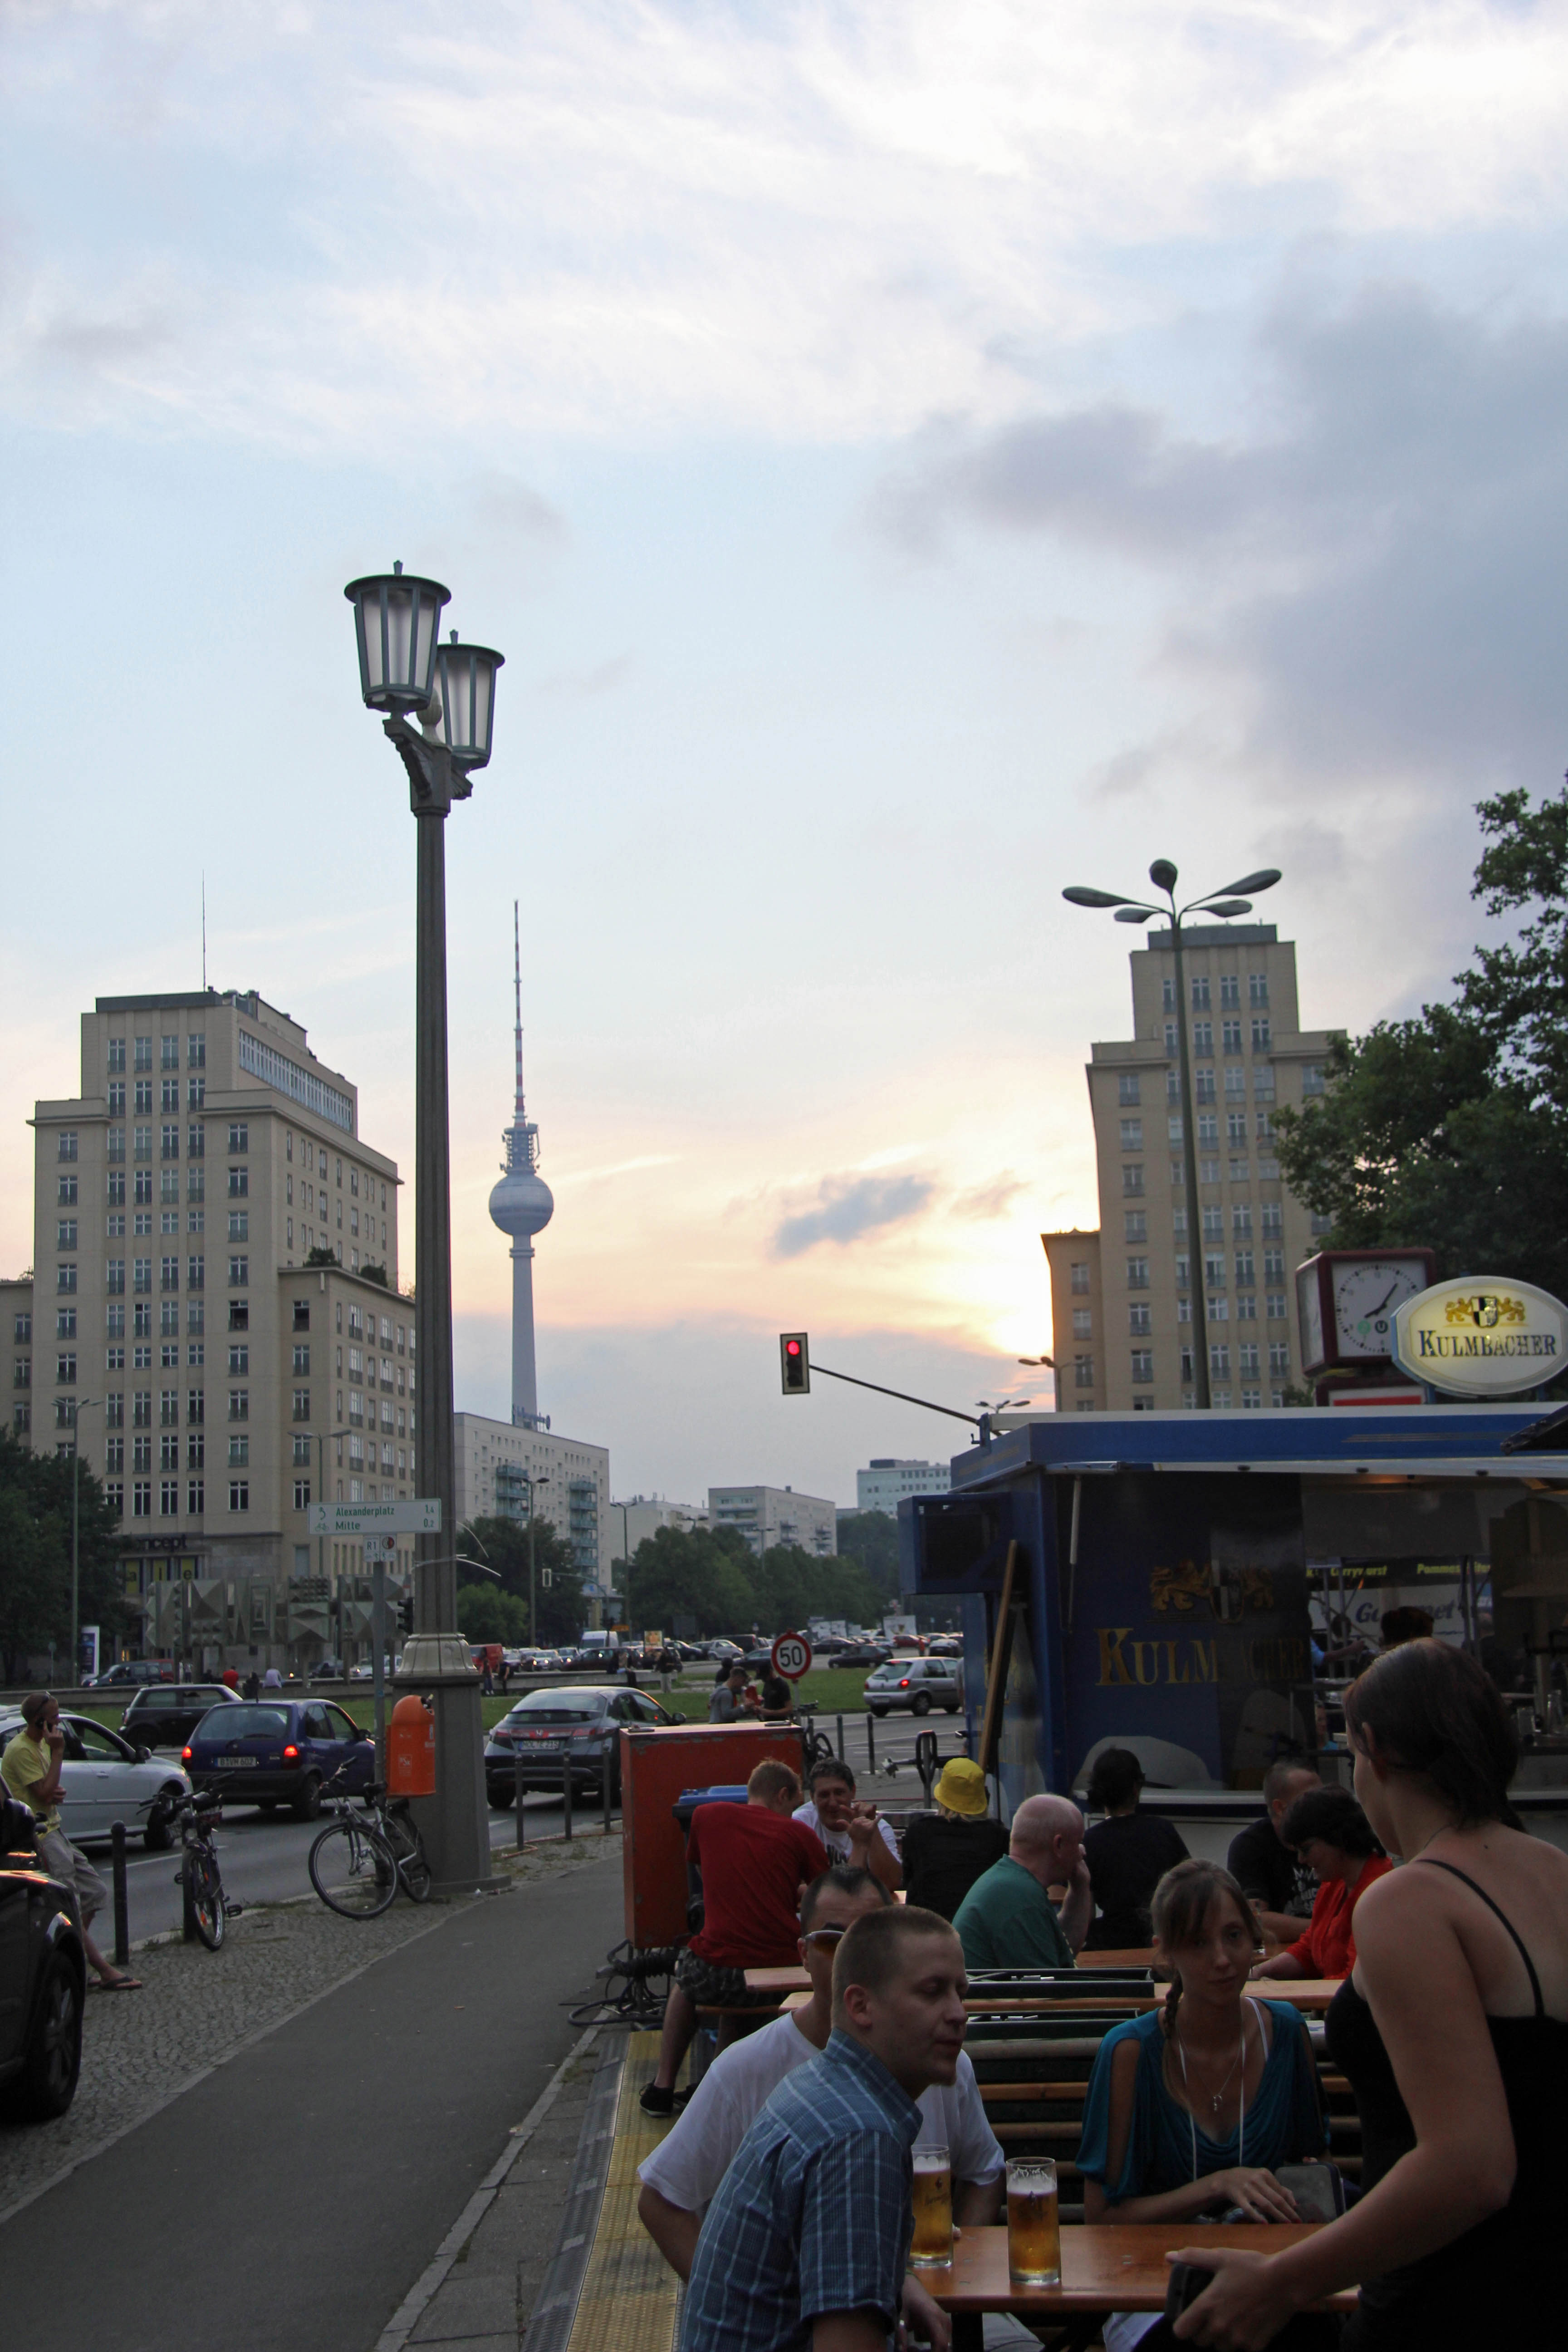 Strausberger Platz during the International Berlin Beer Festival (Internationales Berliner Bierfestival)